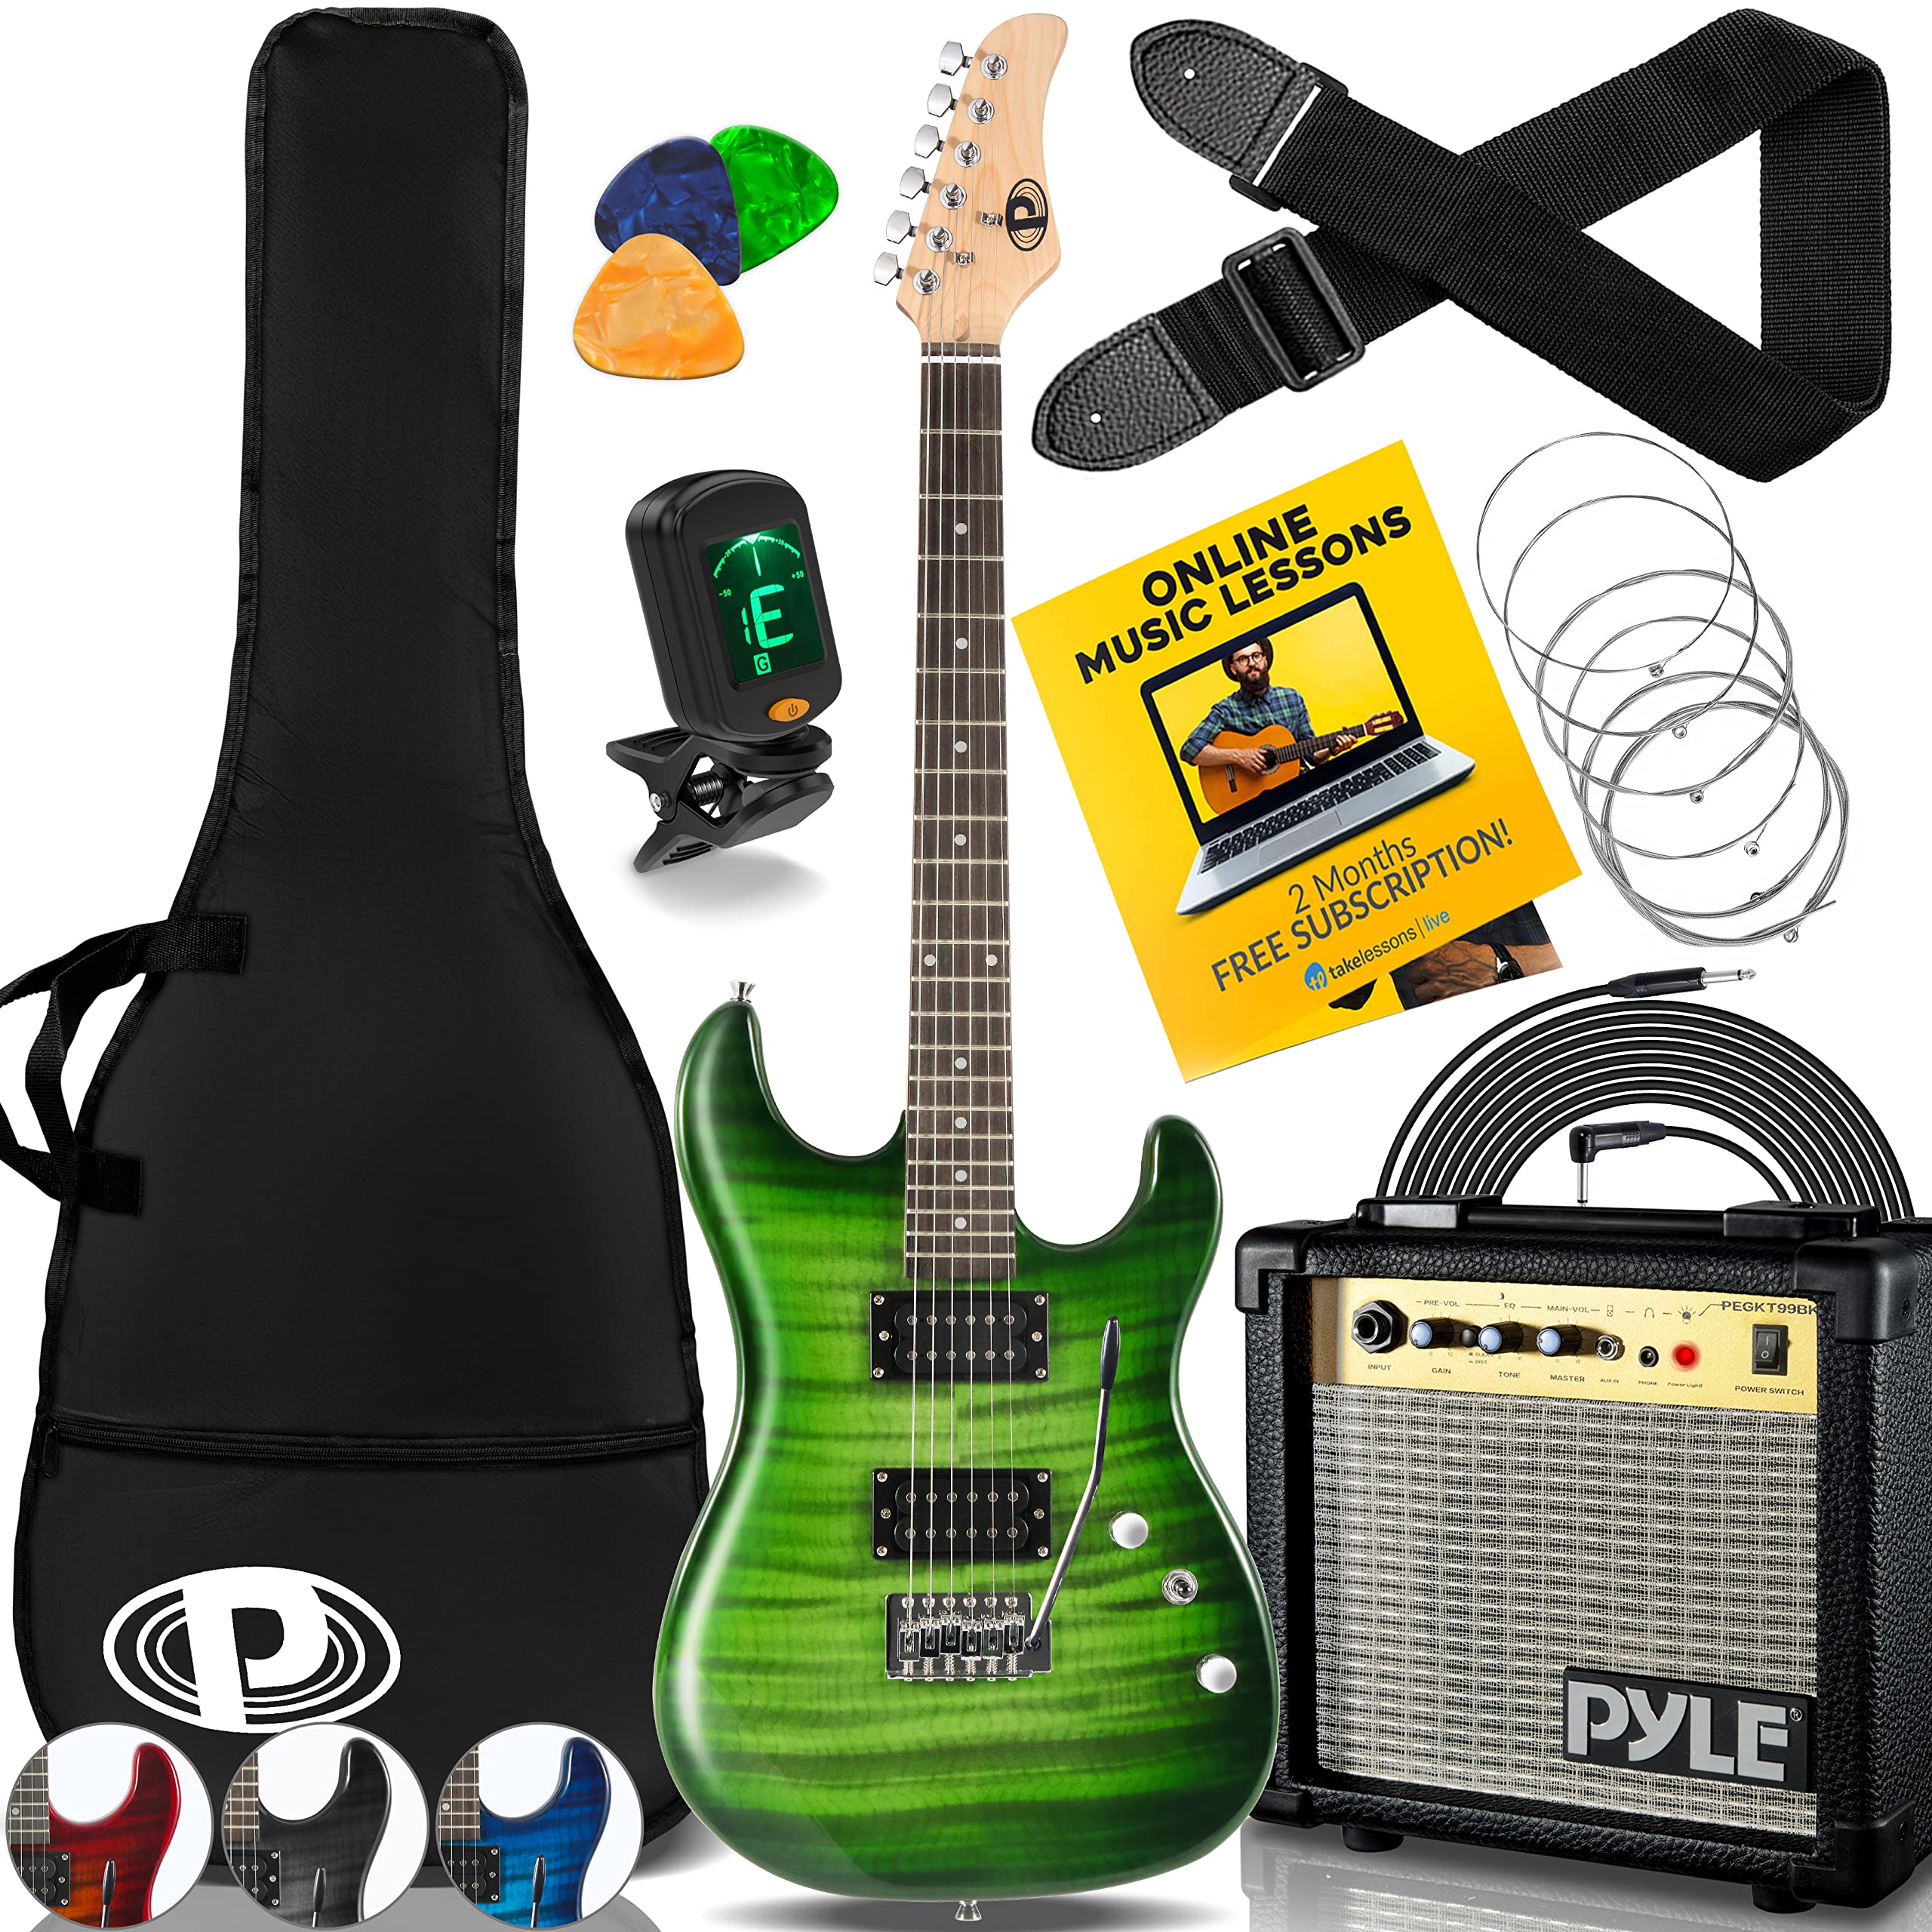 Pyle 带放大器的初学者电吉他套件 - 入门套件全尺寸 39 英寸乐器套装，带双线圈拾音器和摇滚放大器入门套装适合所有年龄段的儿童、青少年和成人